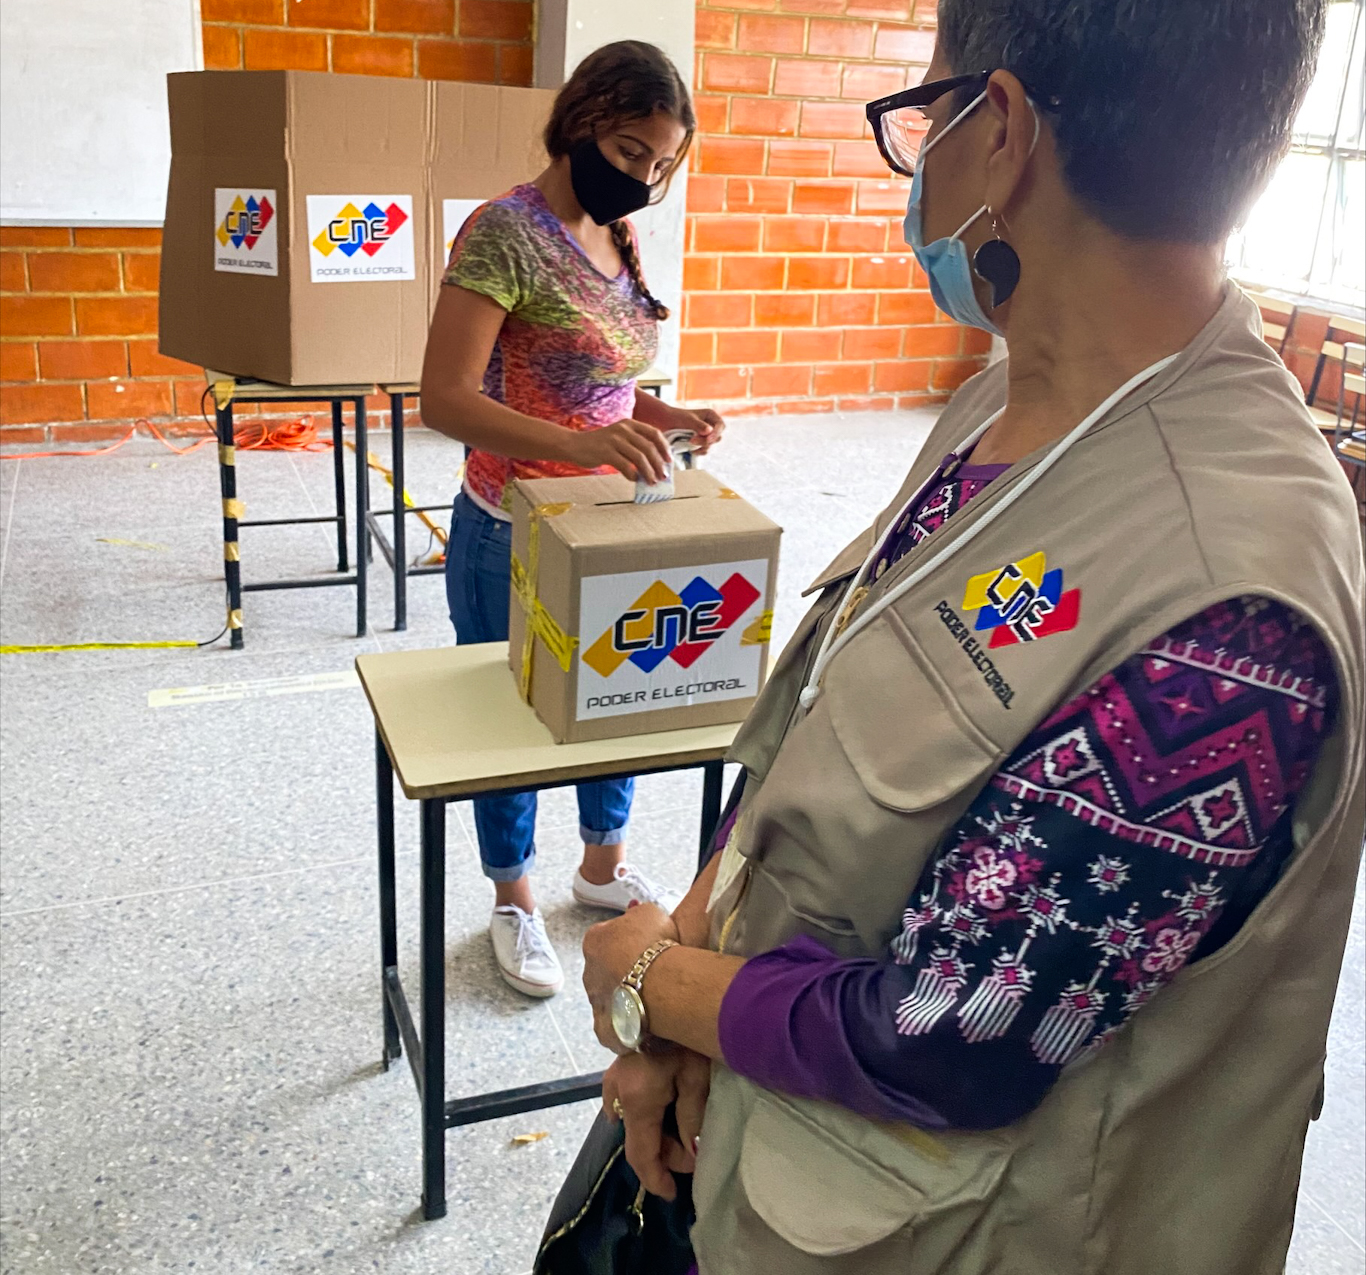 Venezuela Elections